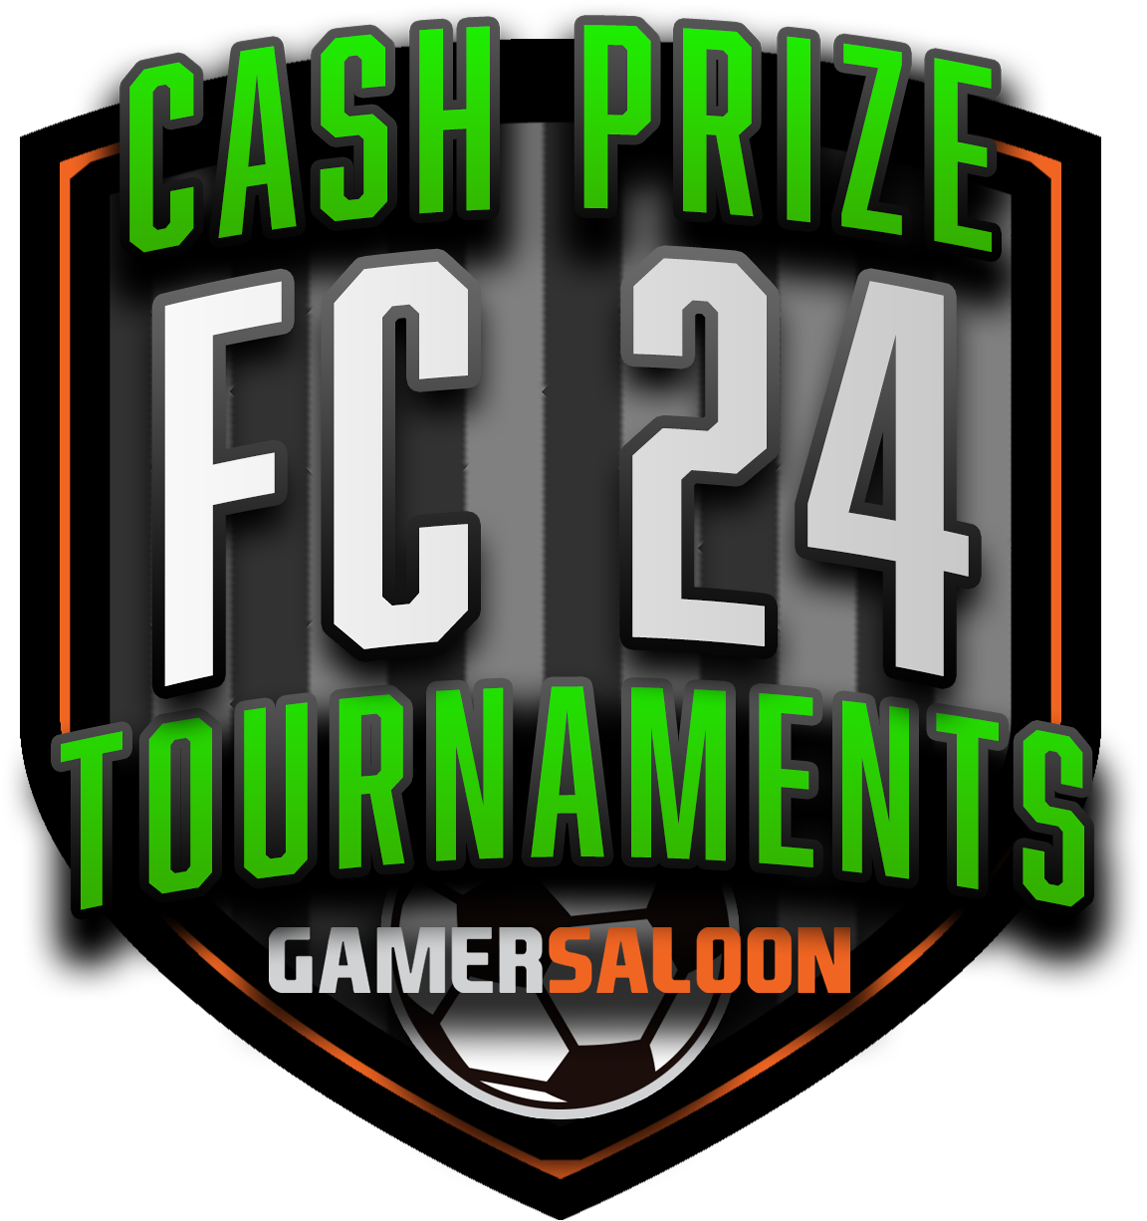 FC 24 Tournaments